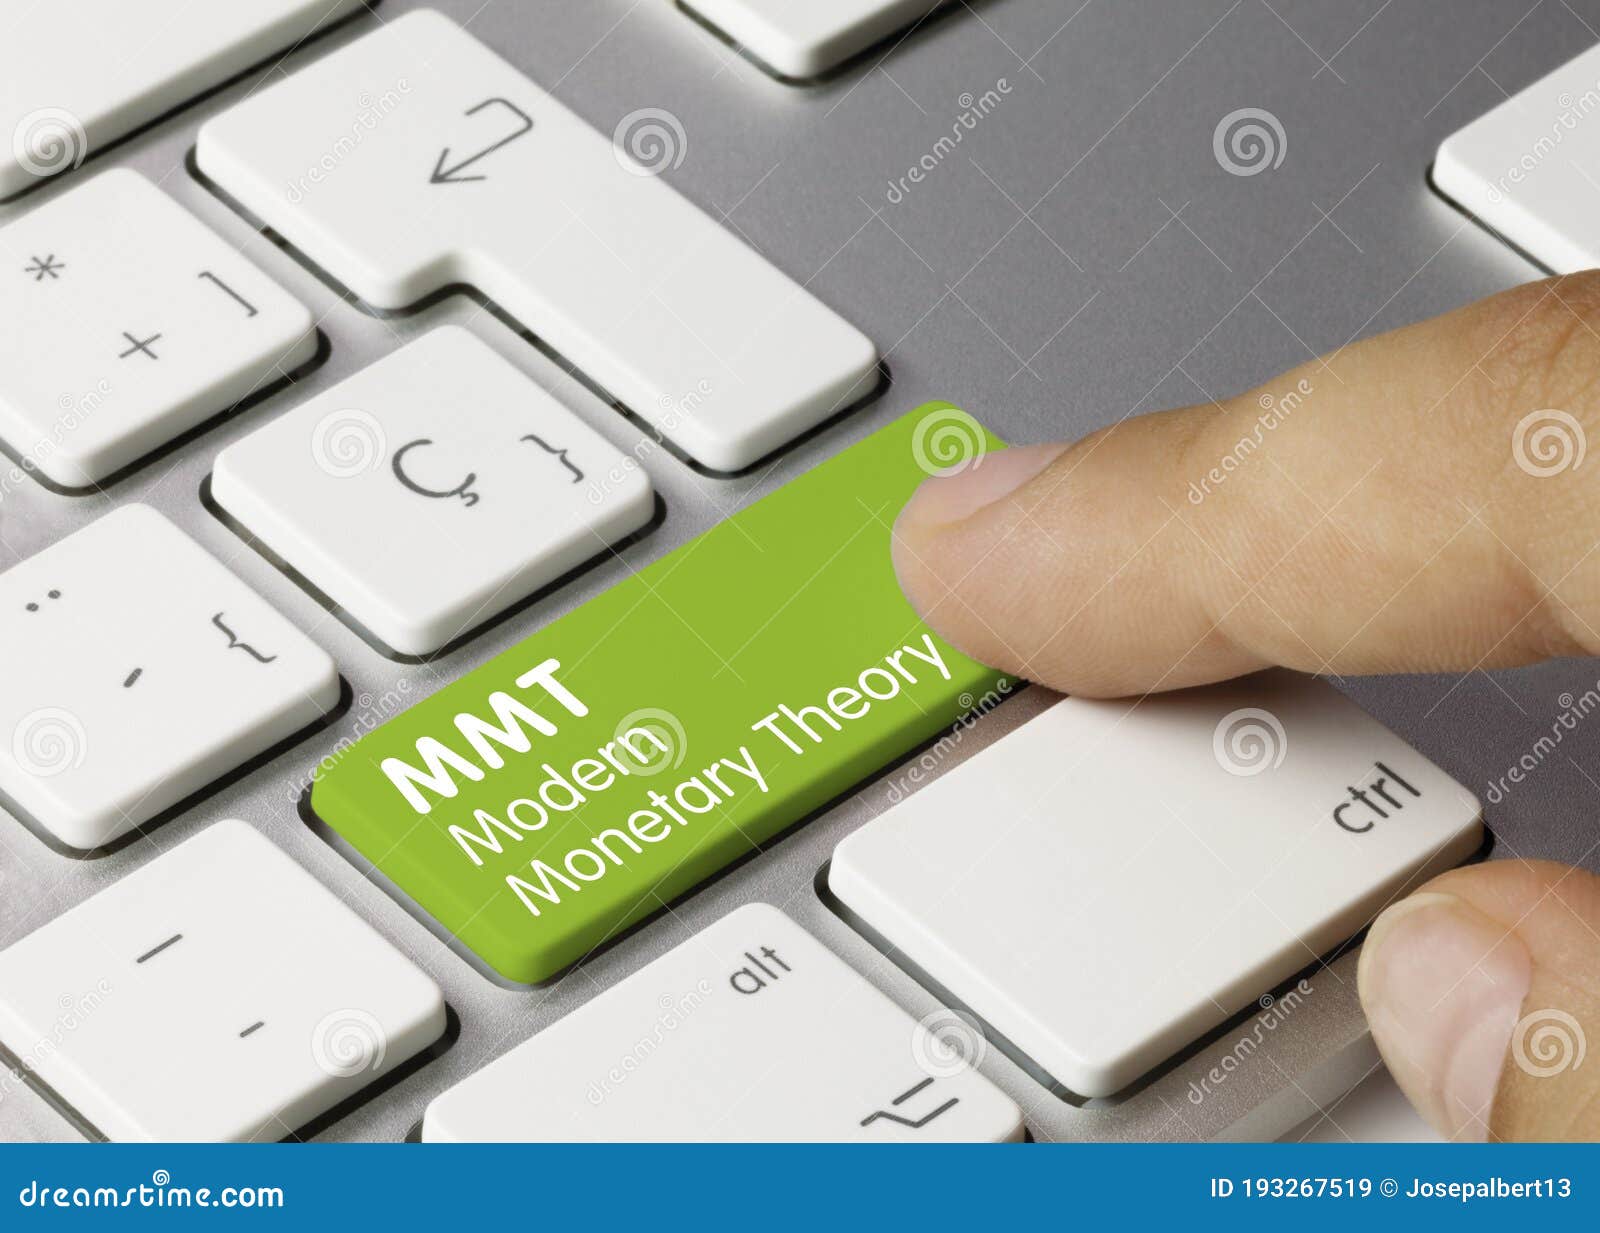 mmt modern monetary theory - inscription on green keyboard key